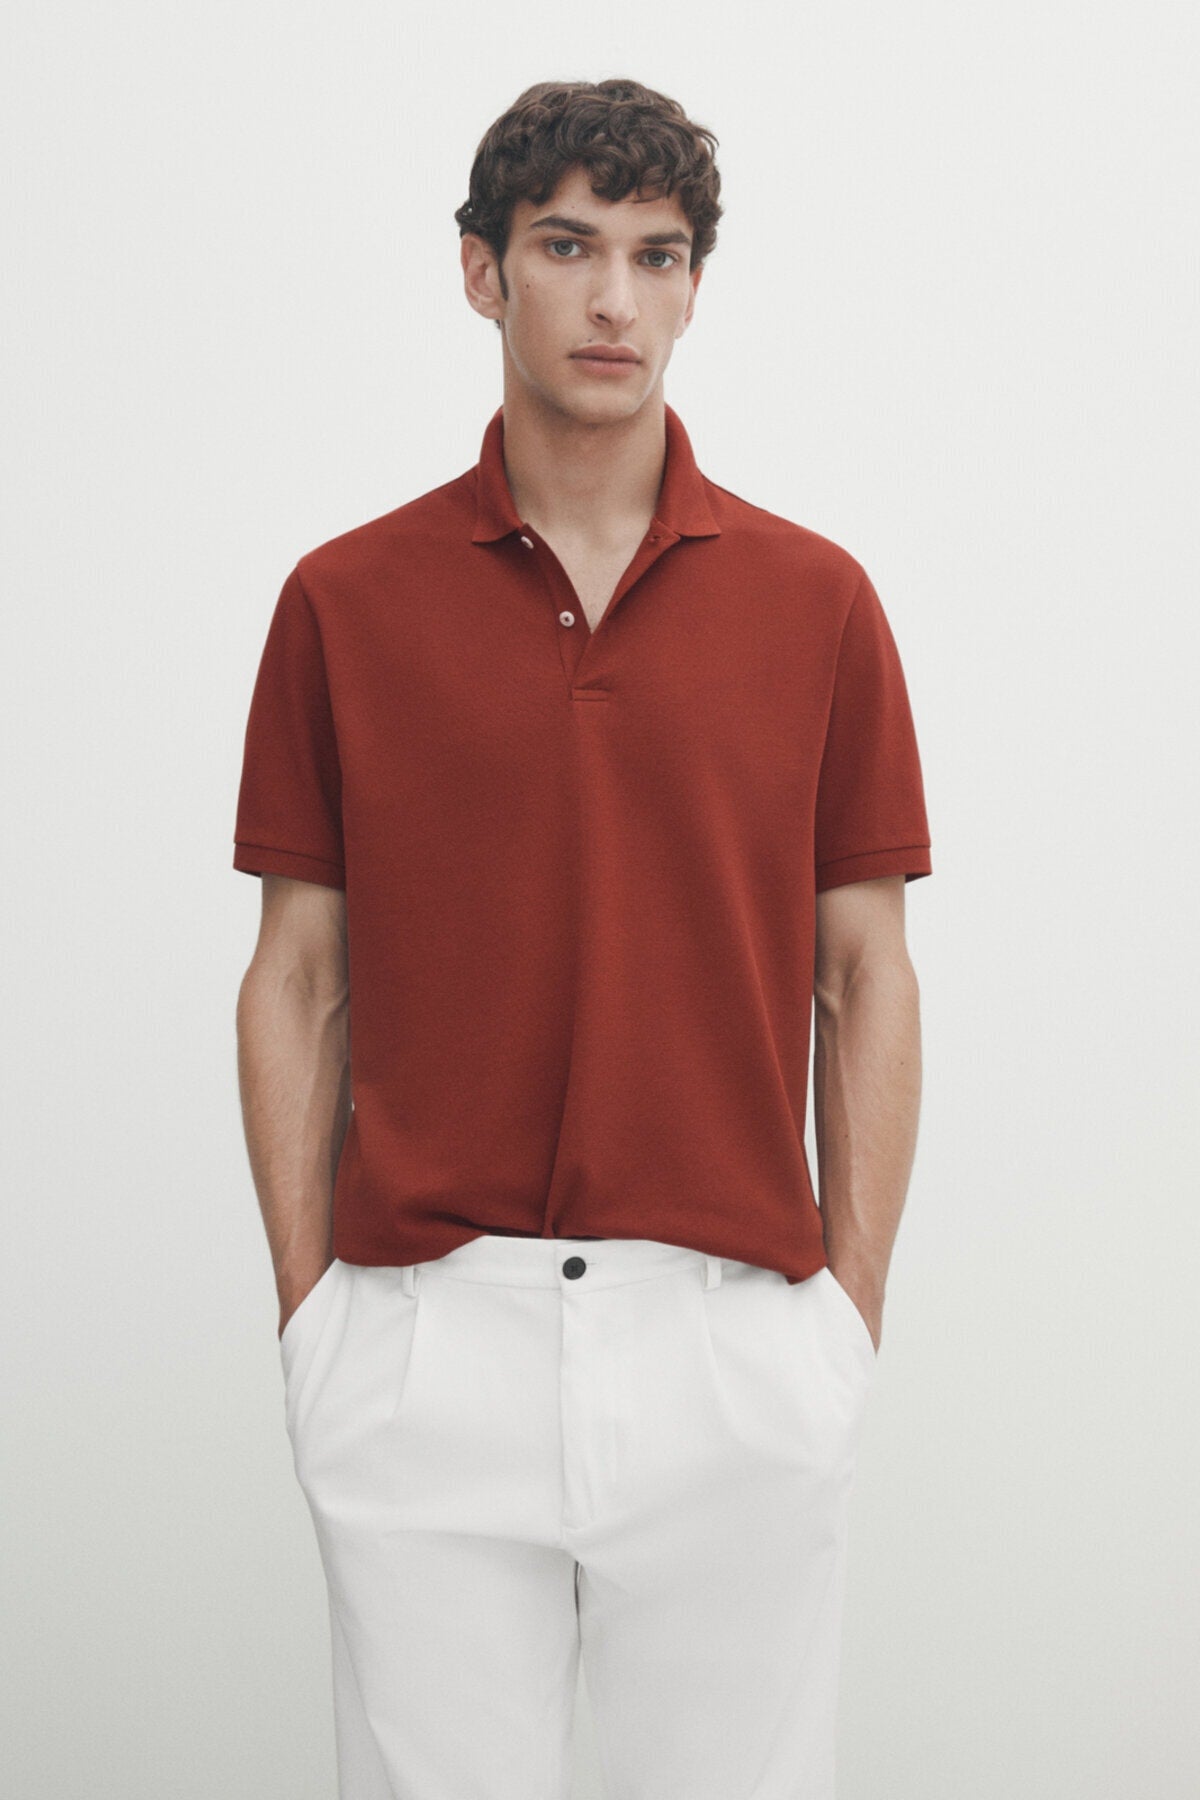 Textured 100% cotton polo t-shirt